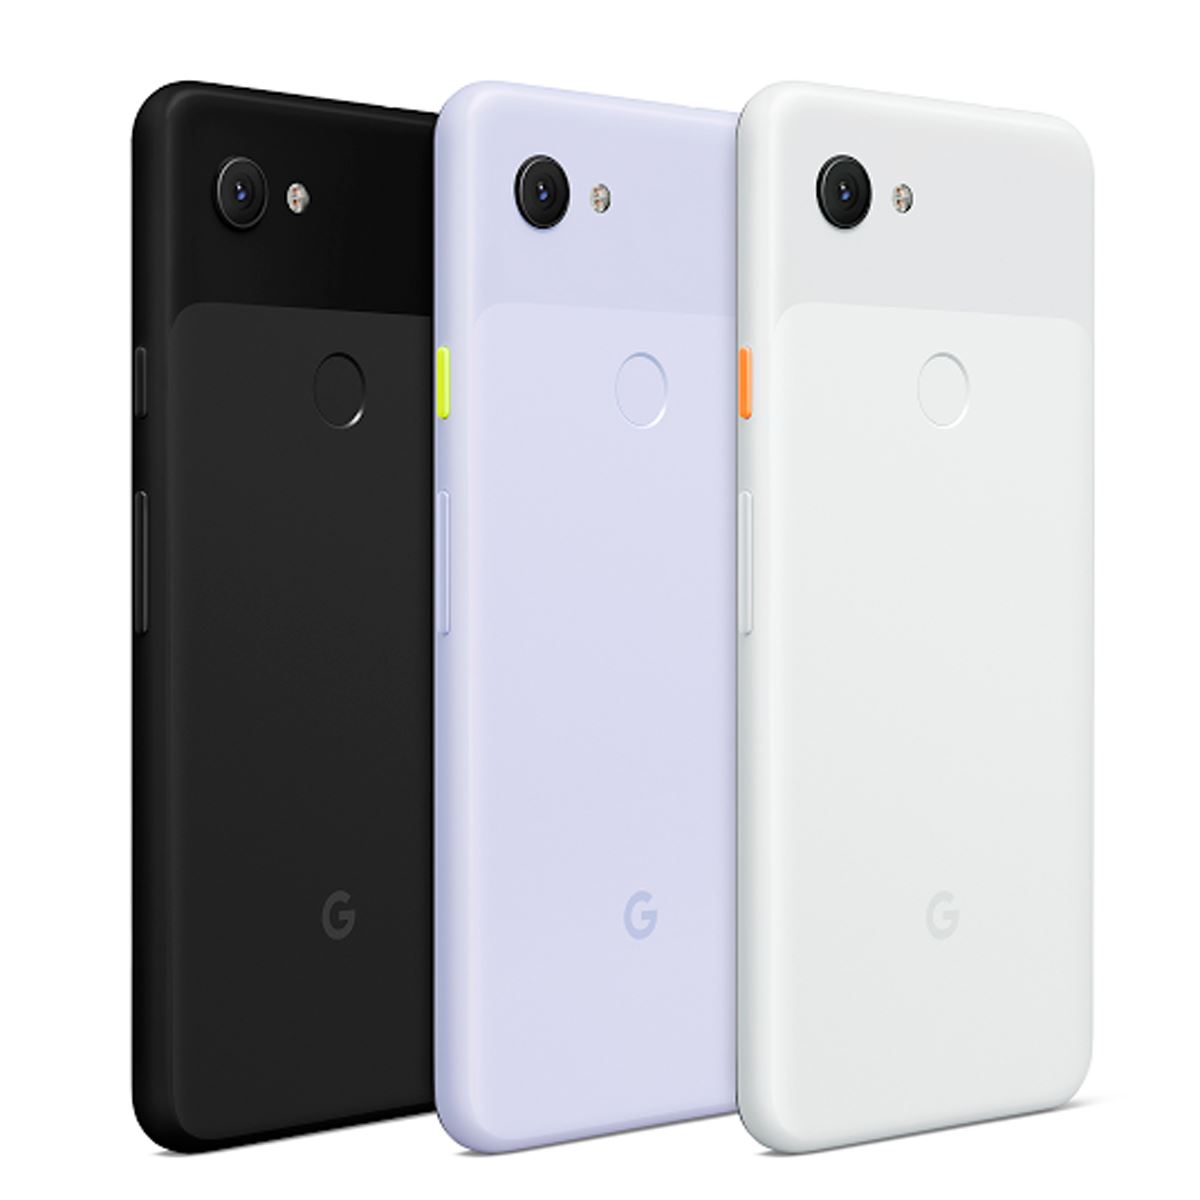 Googleが48,600円の「Pixel 3a」発表。「Pixel 3」との違いは？ - 価格